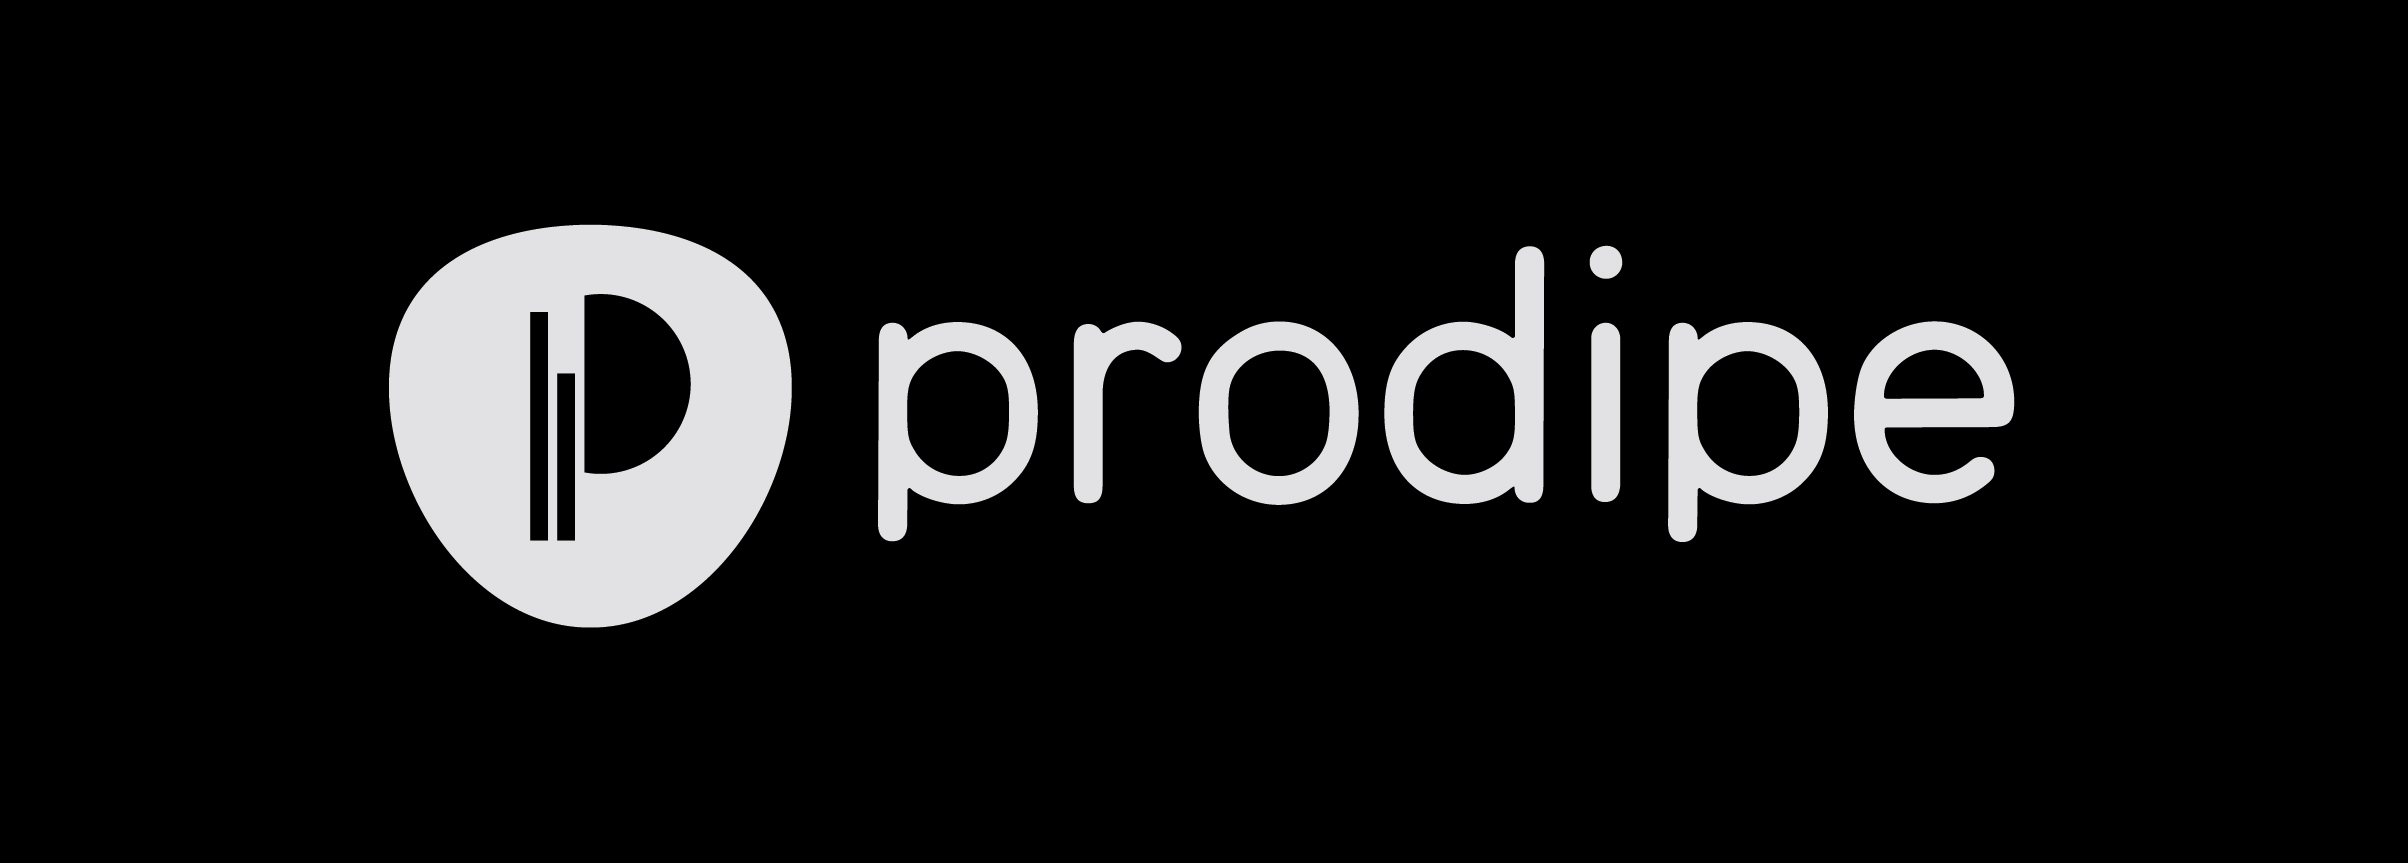 Prodipe-LogoBLANC-02 sur fond NOIR